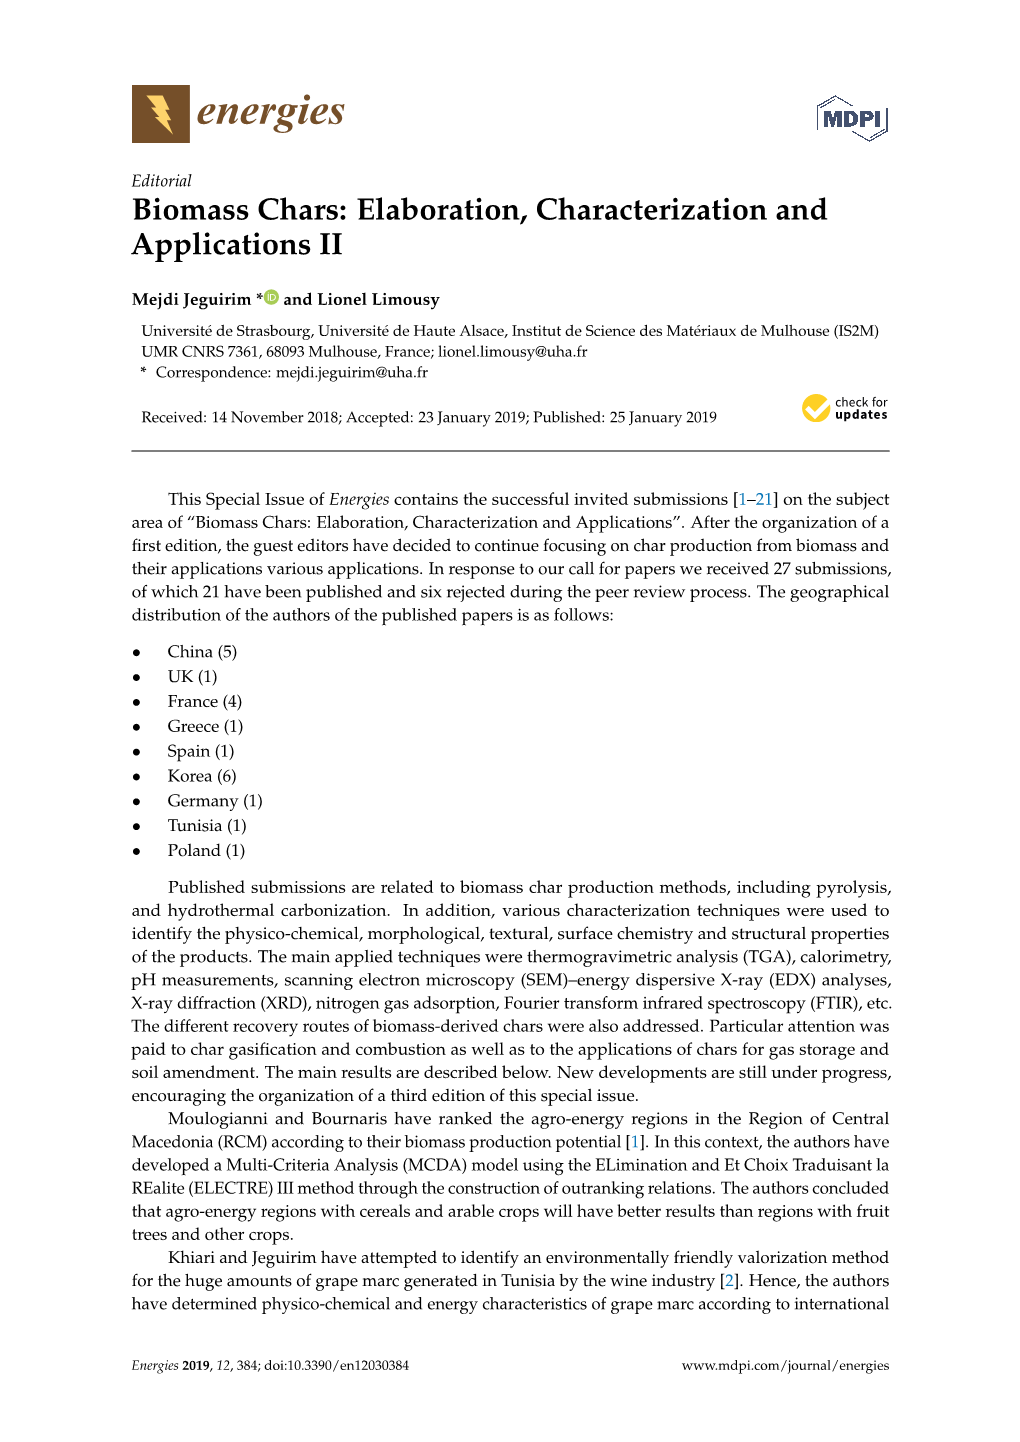 Biomass Chars: Elaboration, Characterization and Applications II